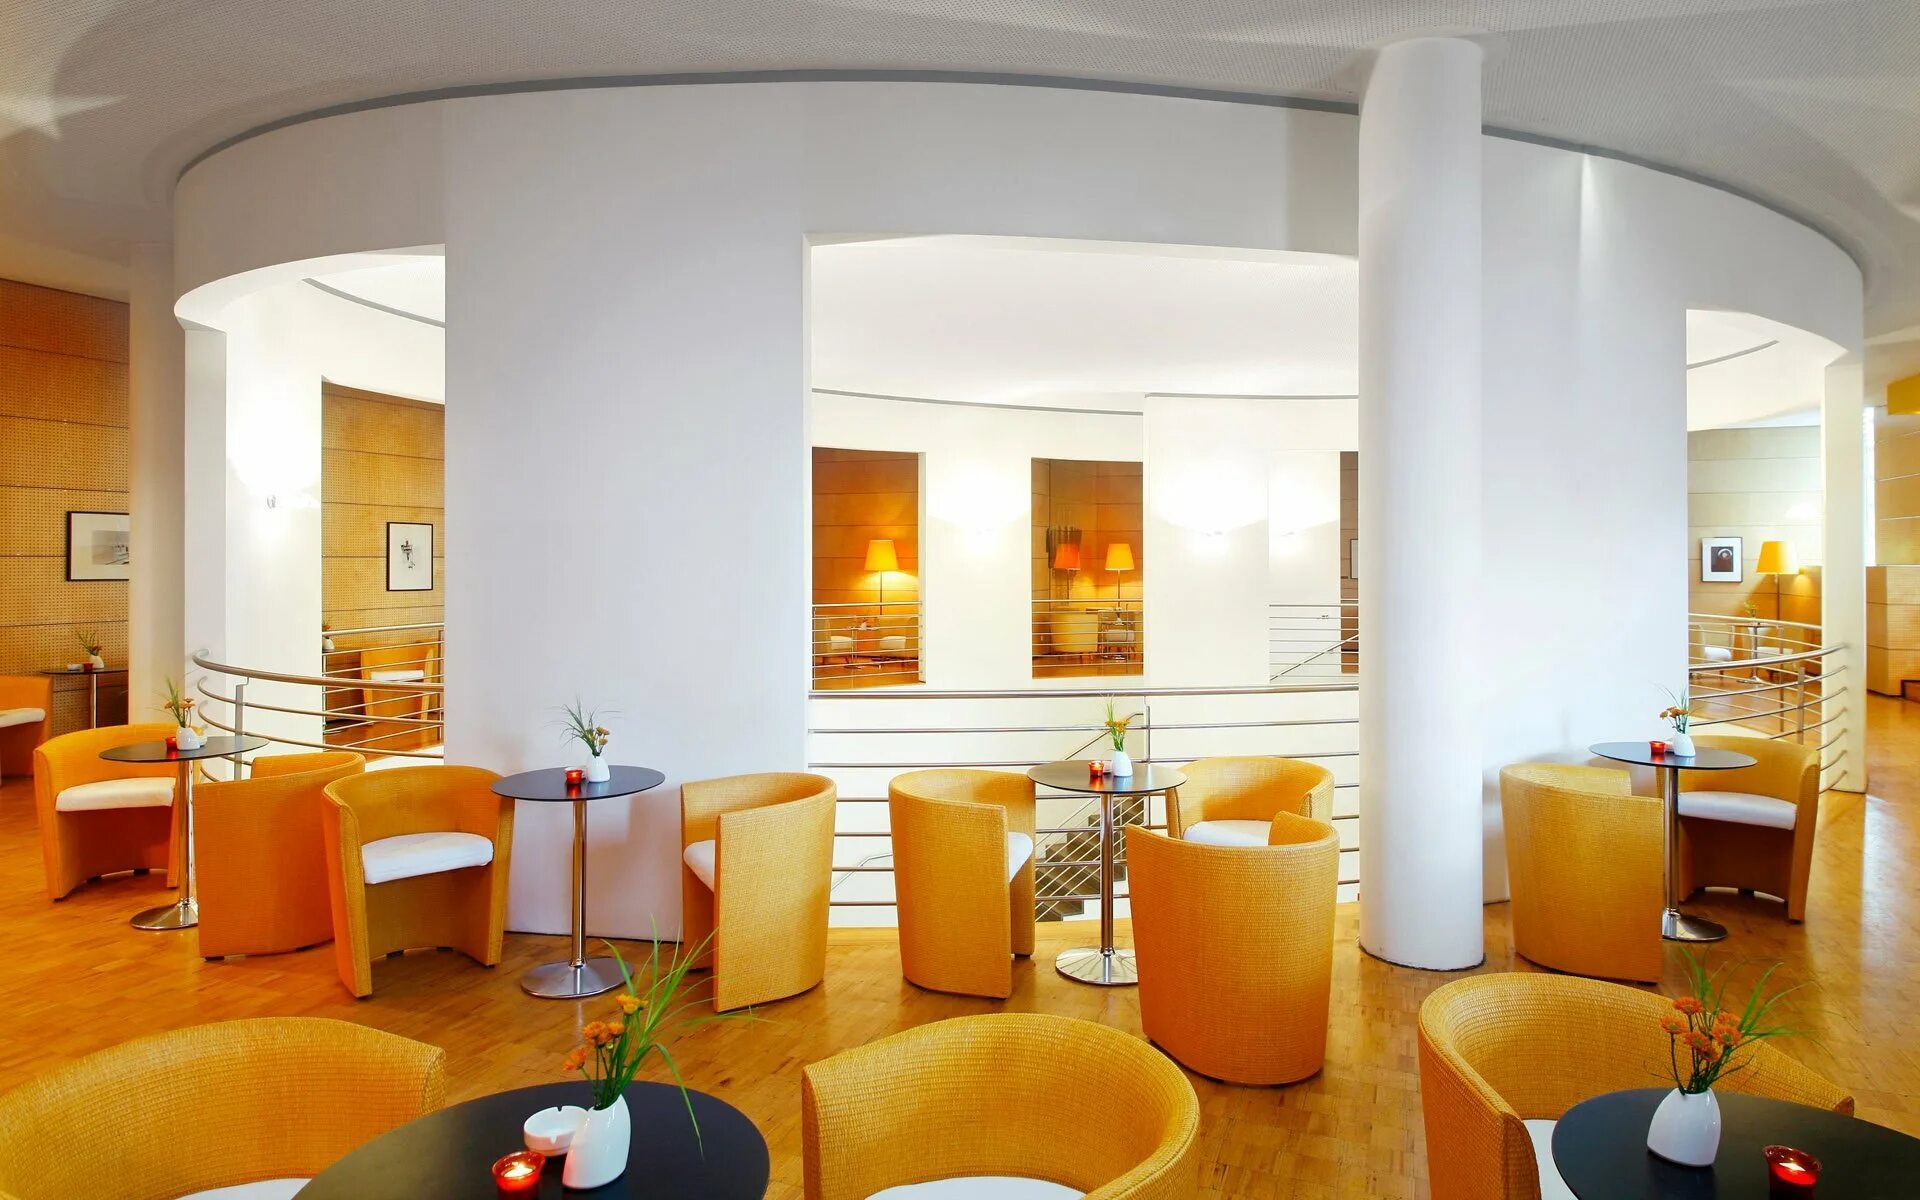 Restoran гостиница Interior Design. Оранжевое кафе интерьер. Интерьер ресторана в оранжевых тонах. Кафе в оранжевом цвете.